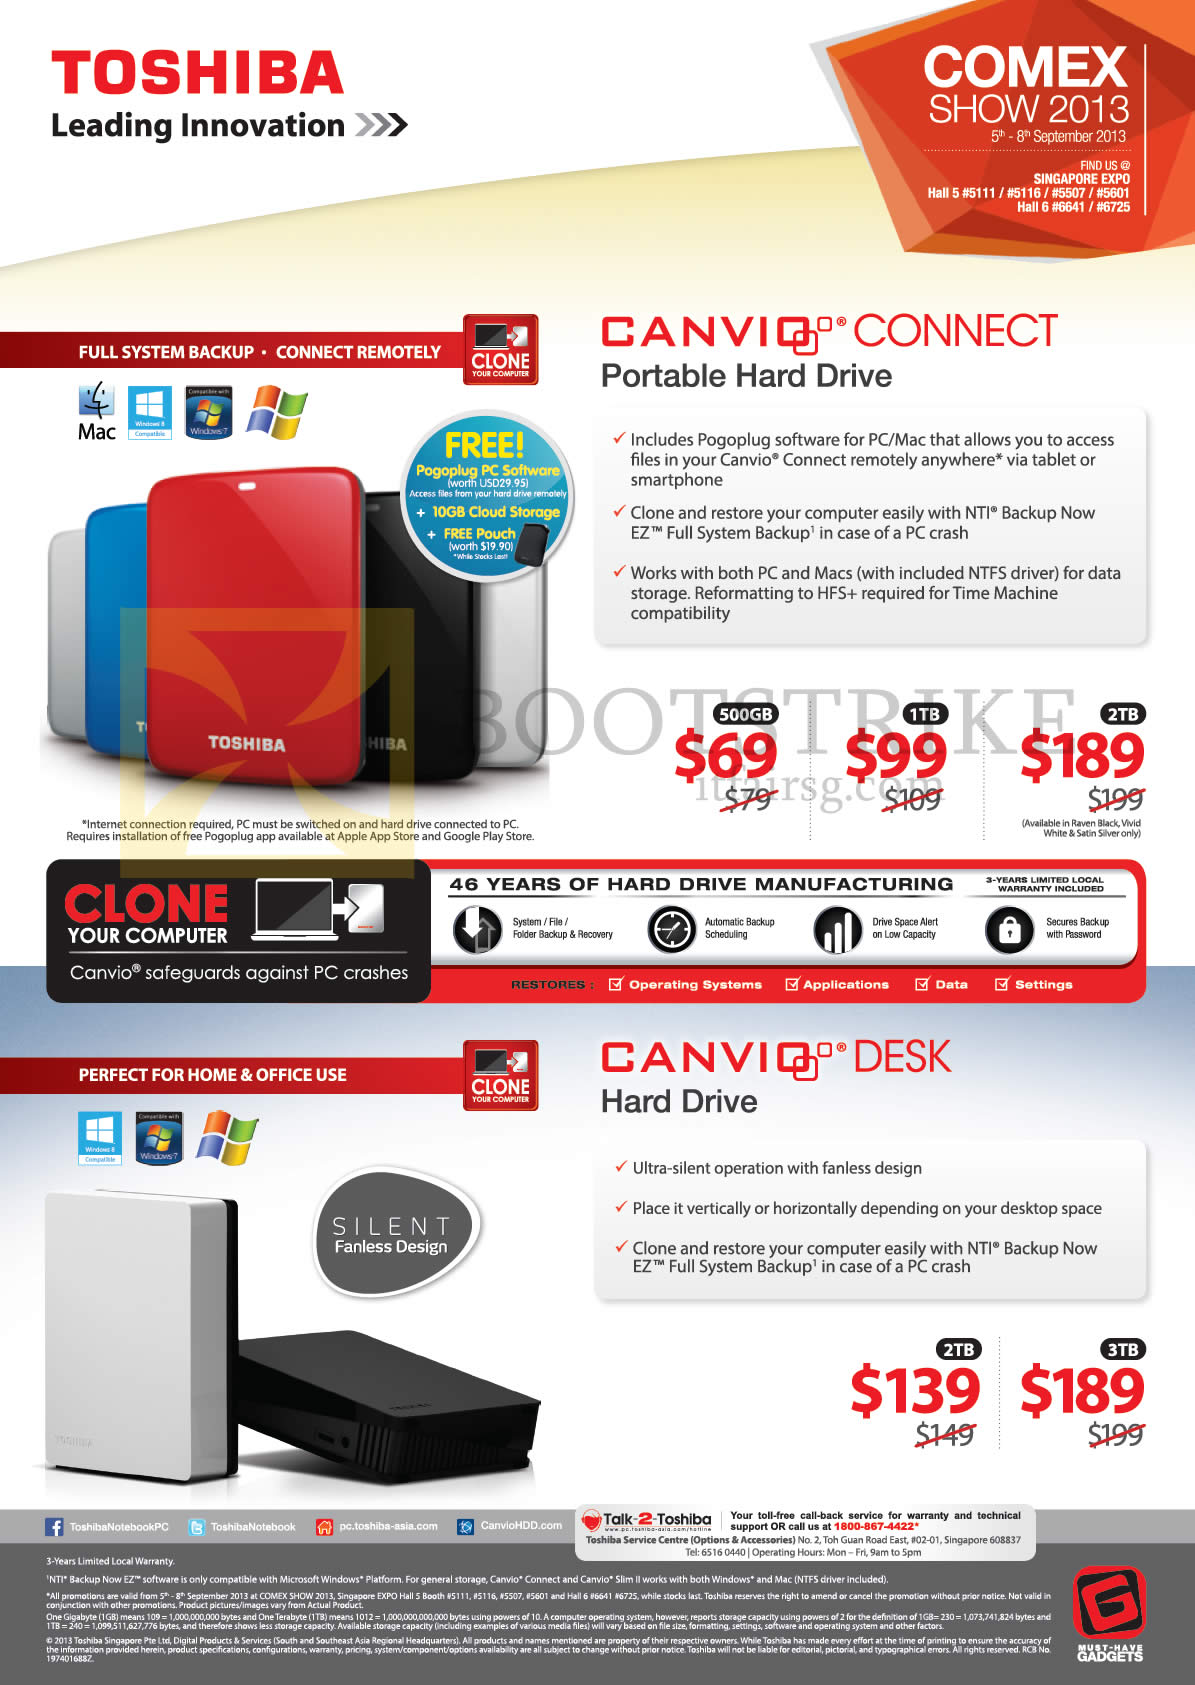 COMEX 2013 price list image brochure of Toshiba External Storage Canvio Connect 500GB 1TB 2TB, Desk Hard Drive